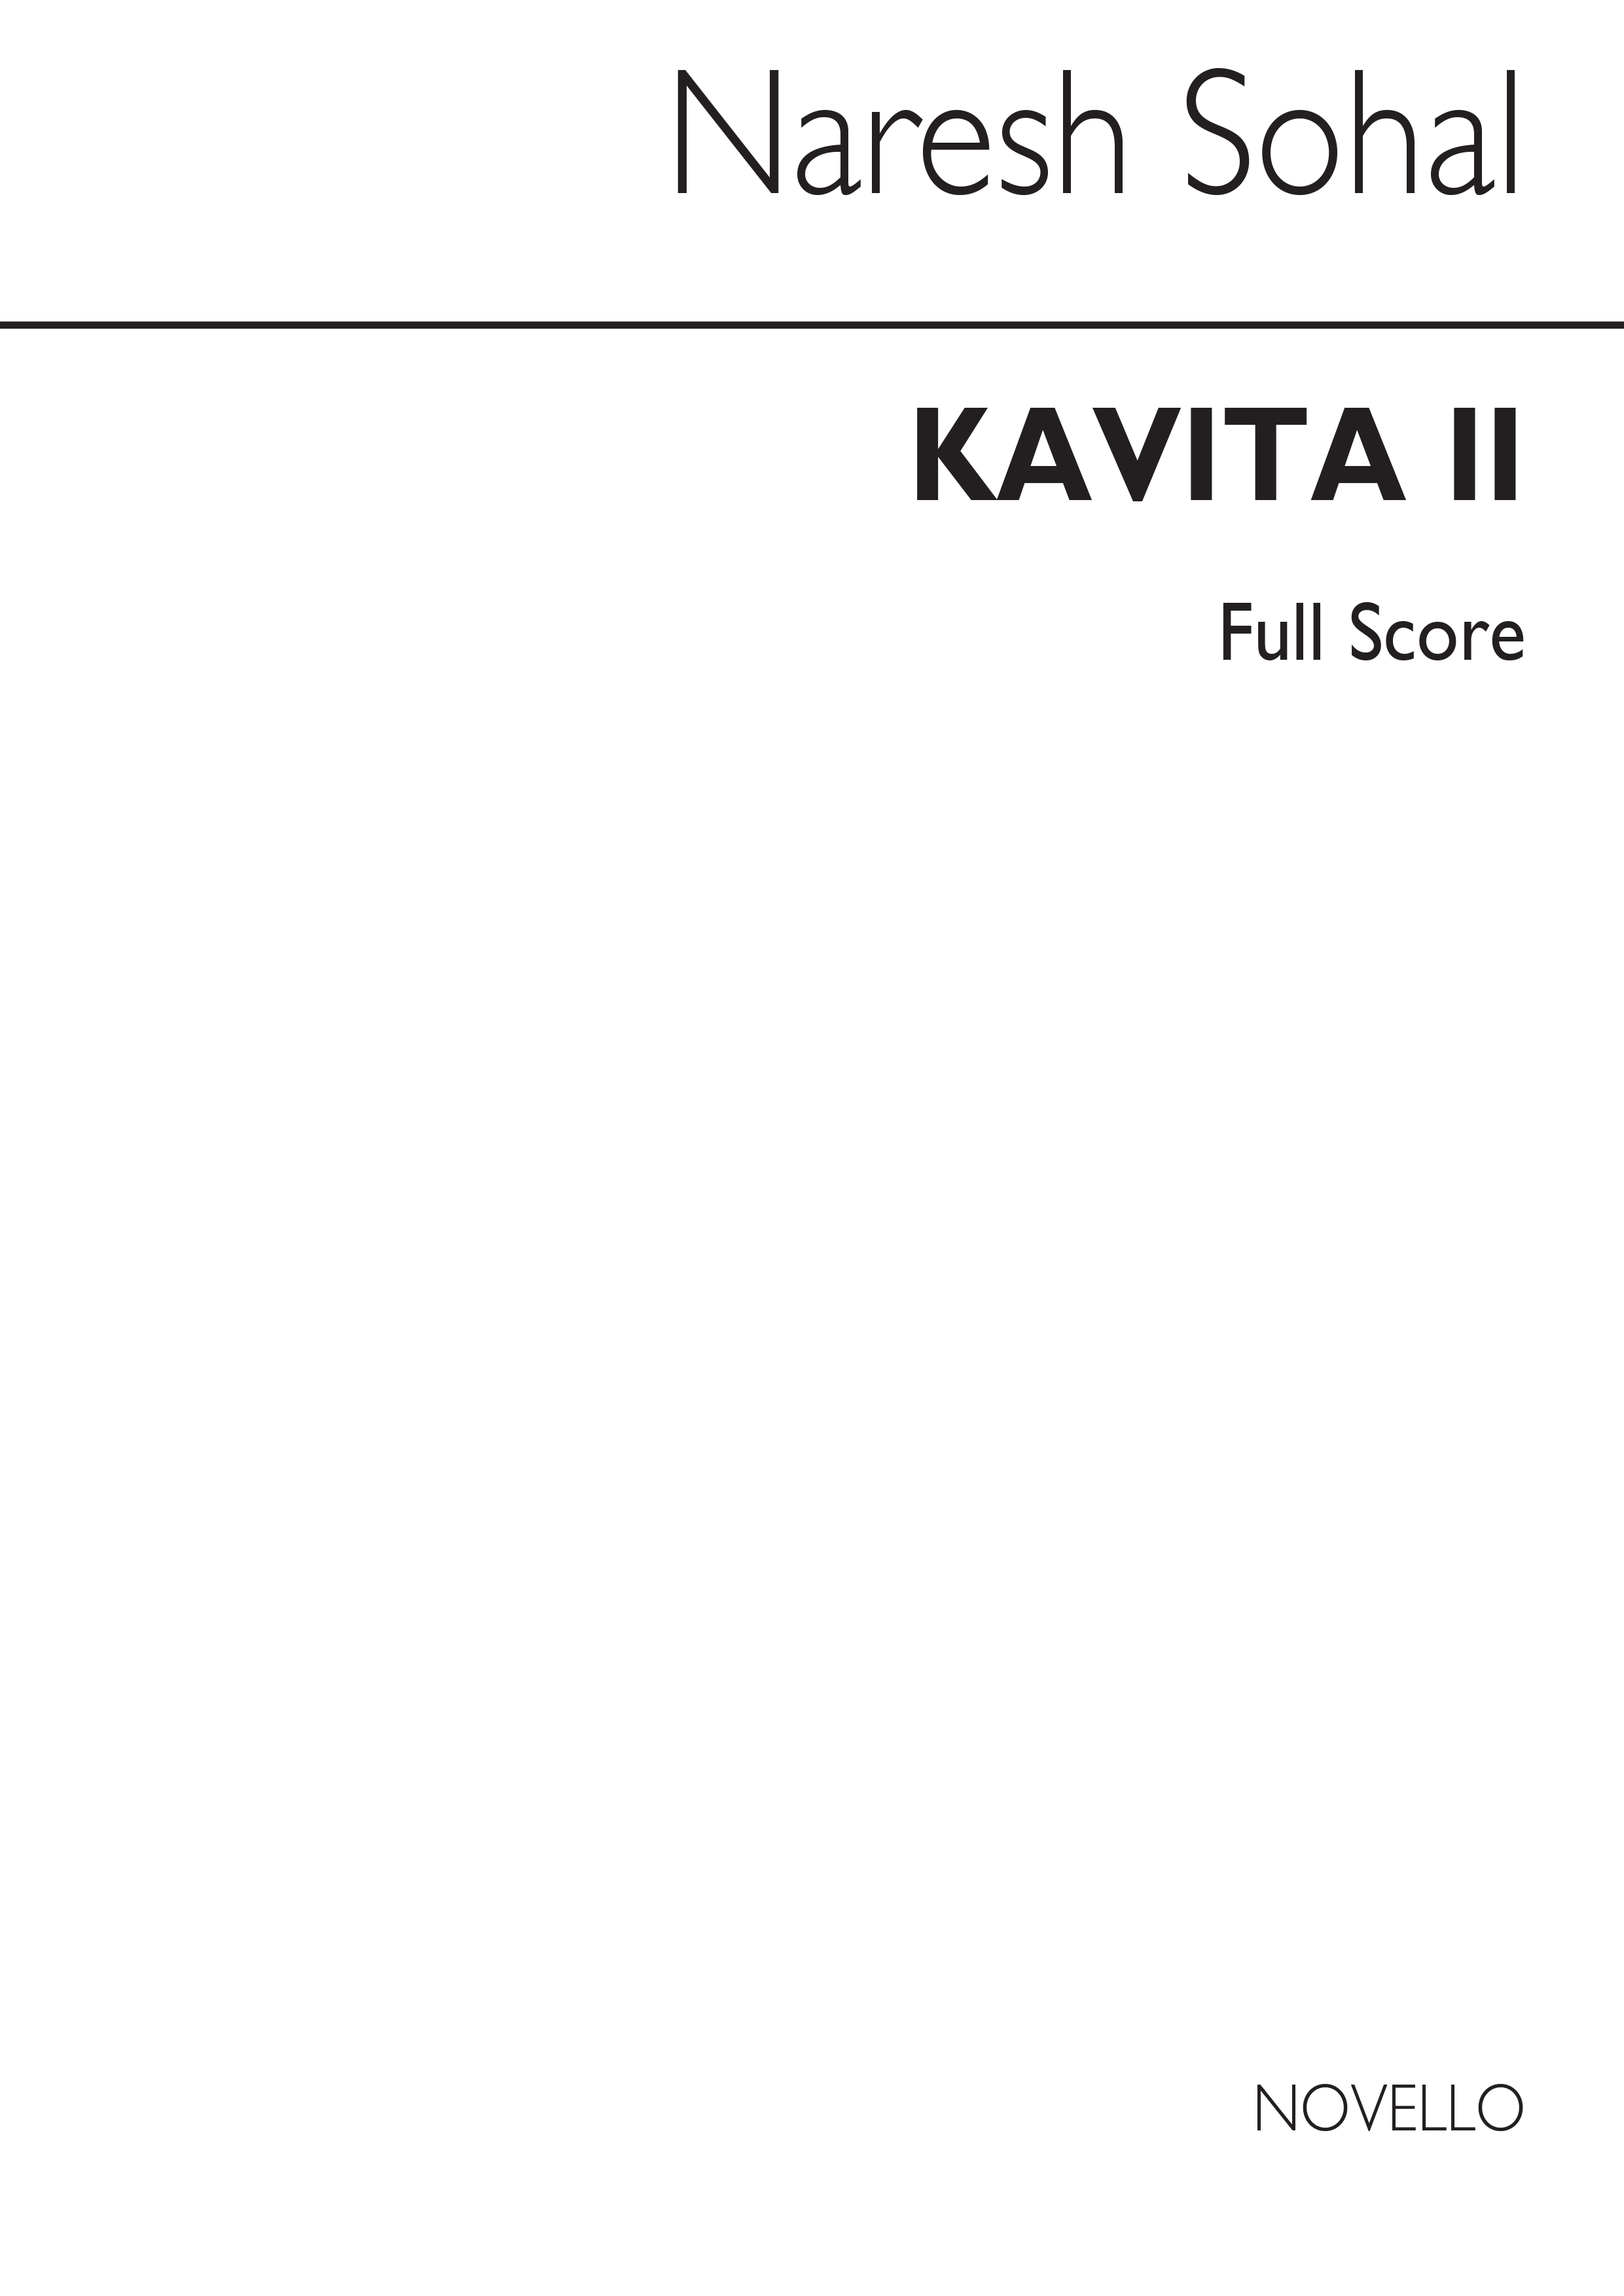 Sohal: Kavita II